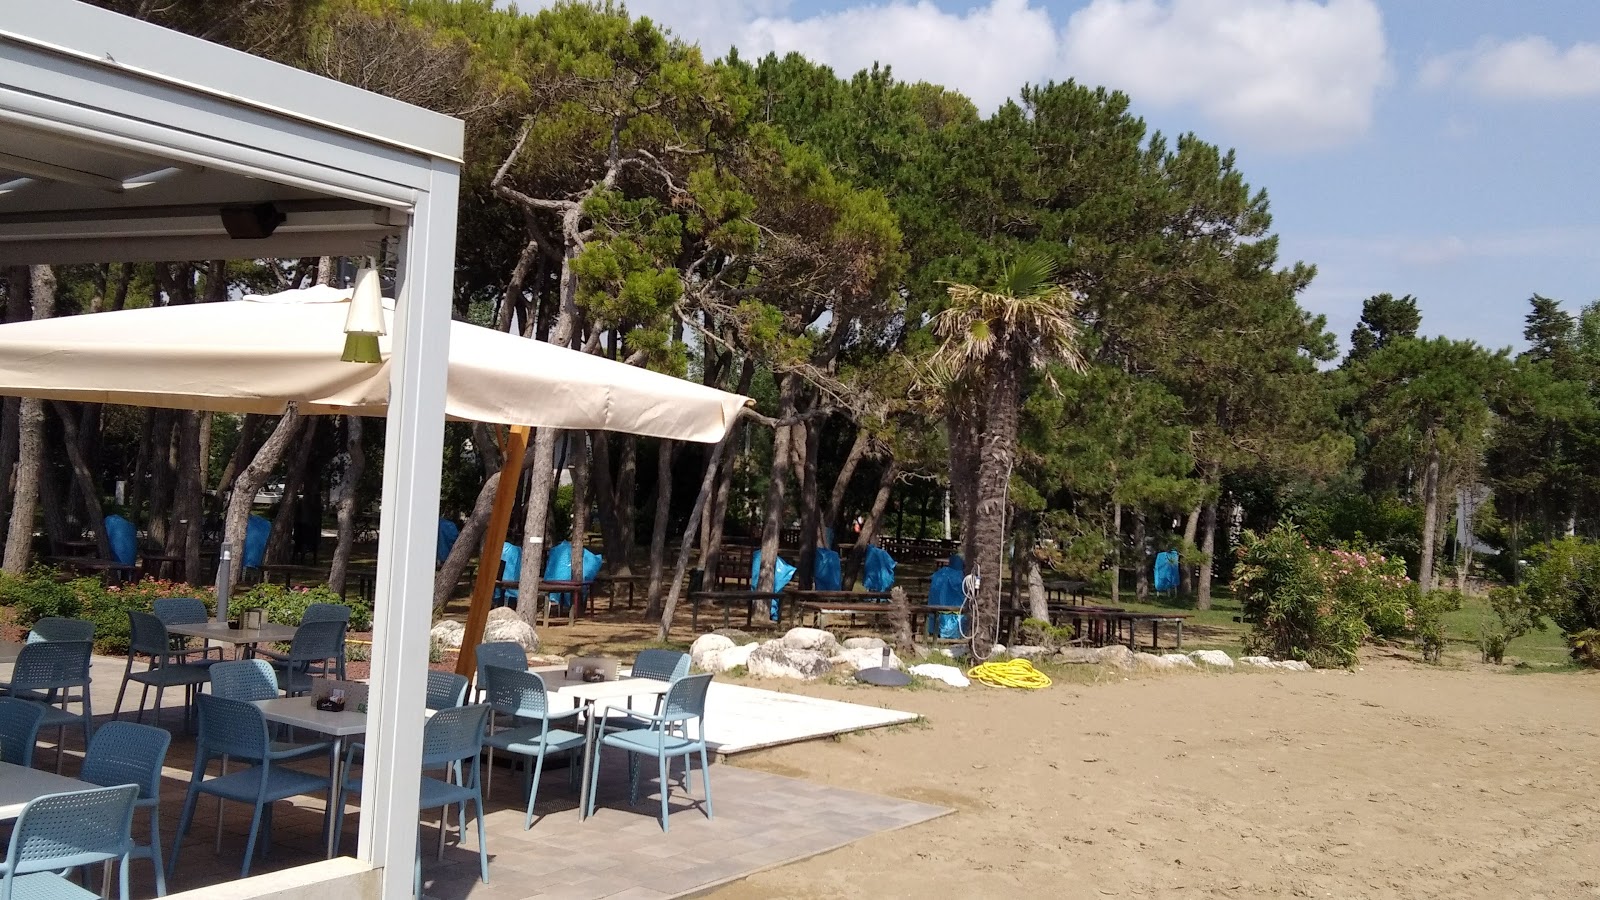 Foto de Spiaggia Libera Caorle - lugar popular entre os apreciadores de relaxamento